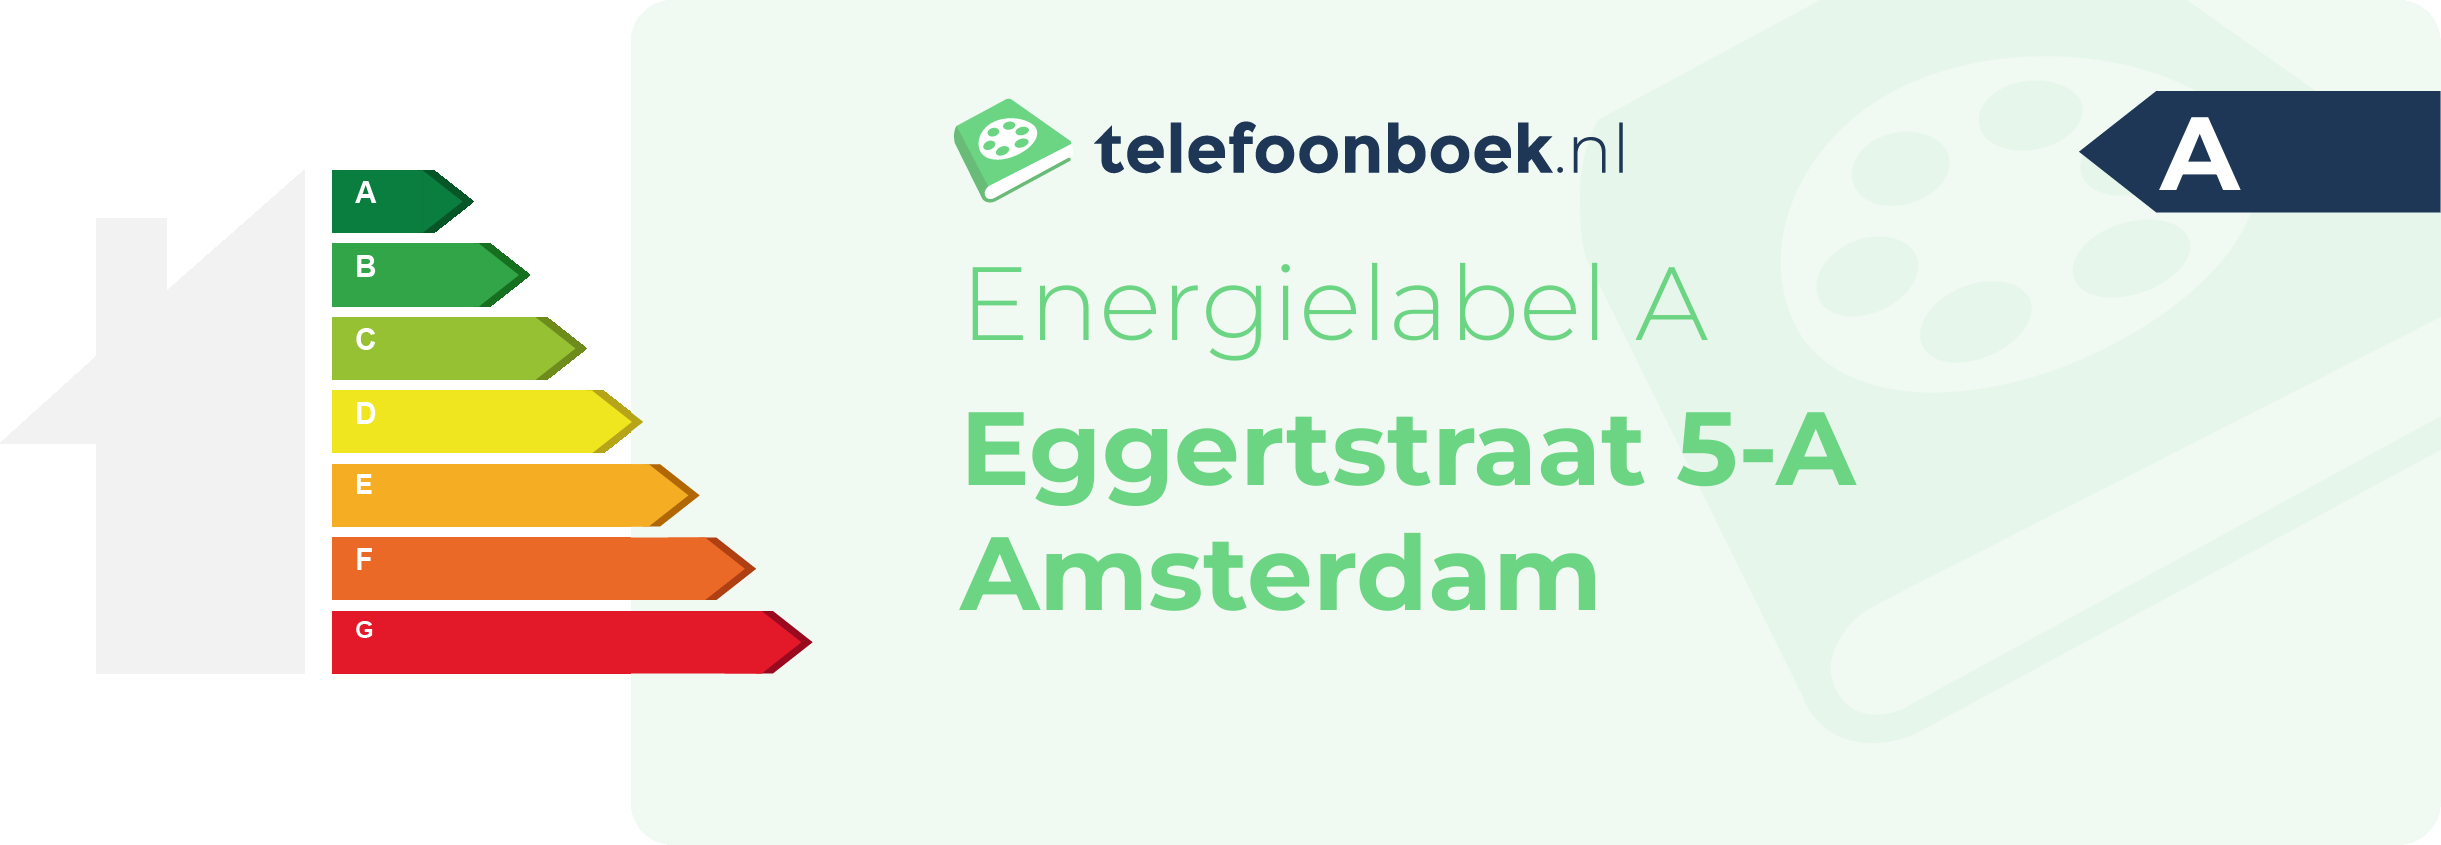 Energielabel Eggertstraat 5-A Amsterdam